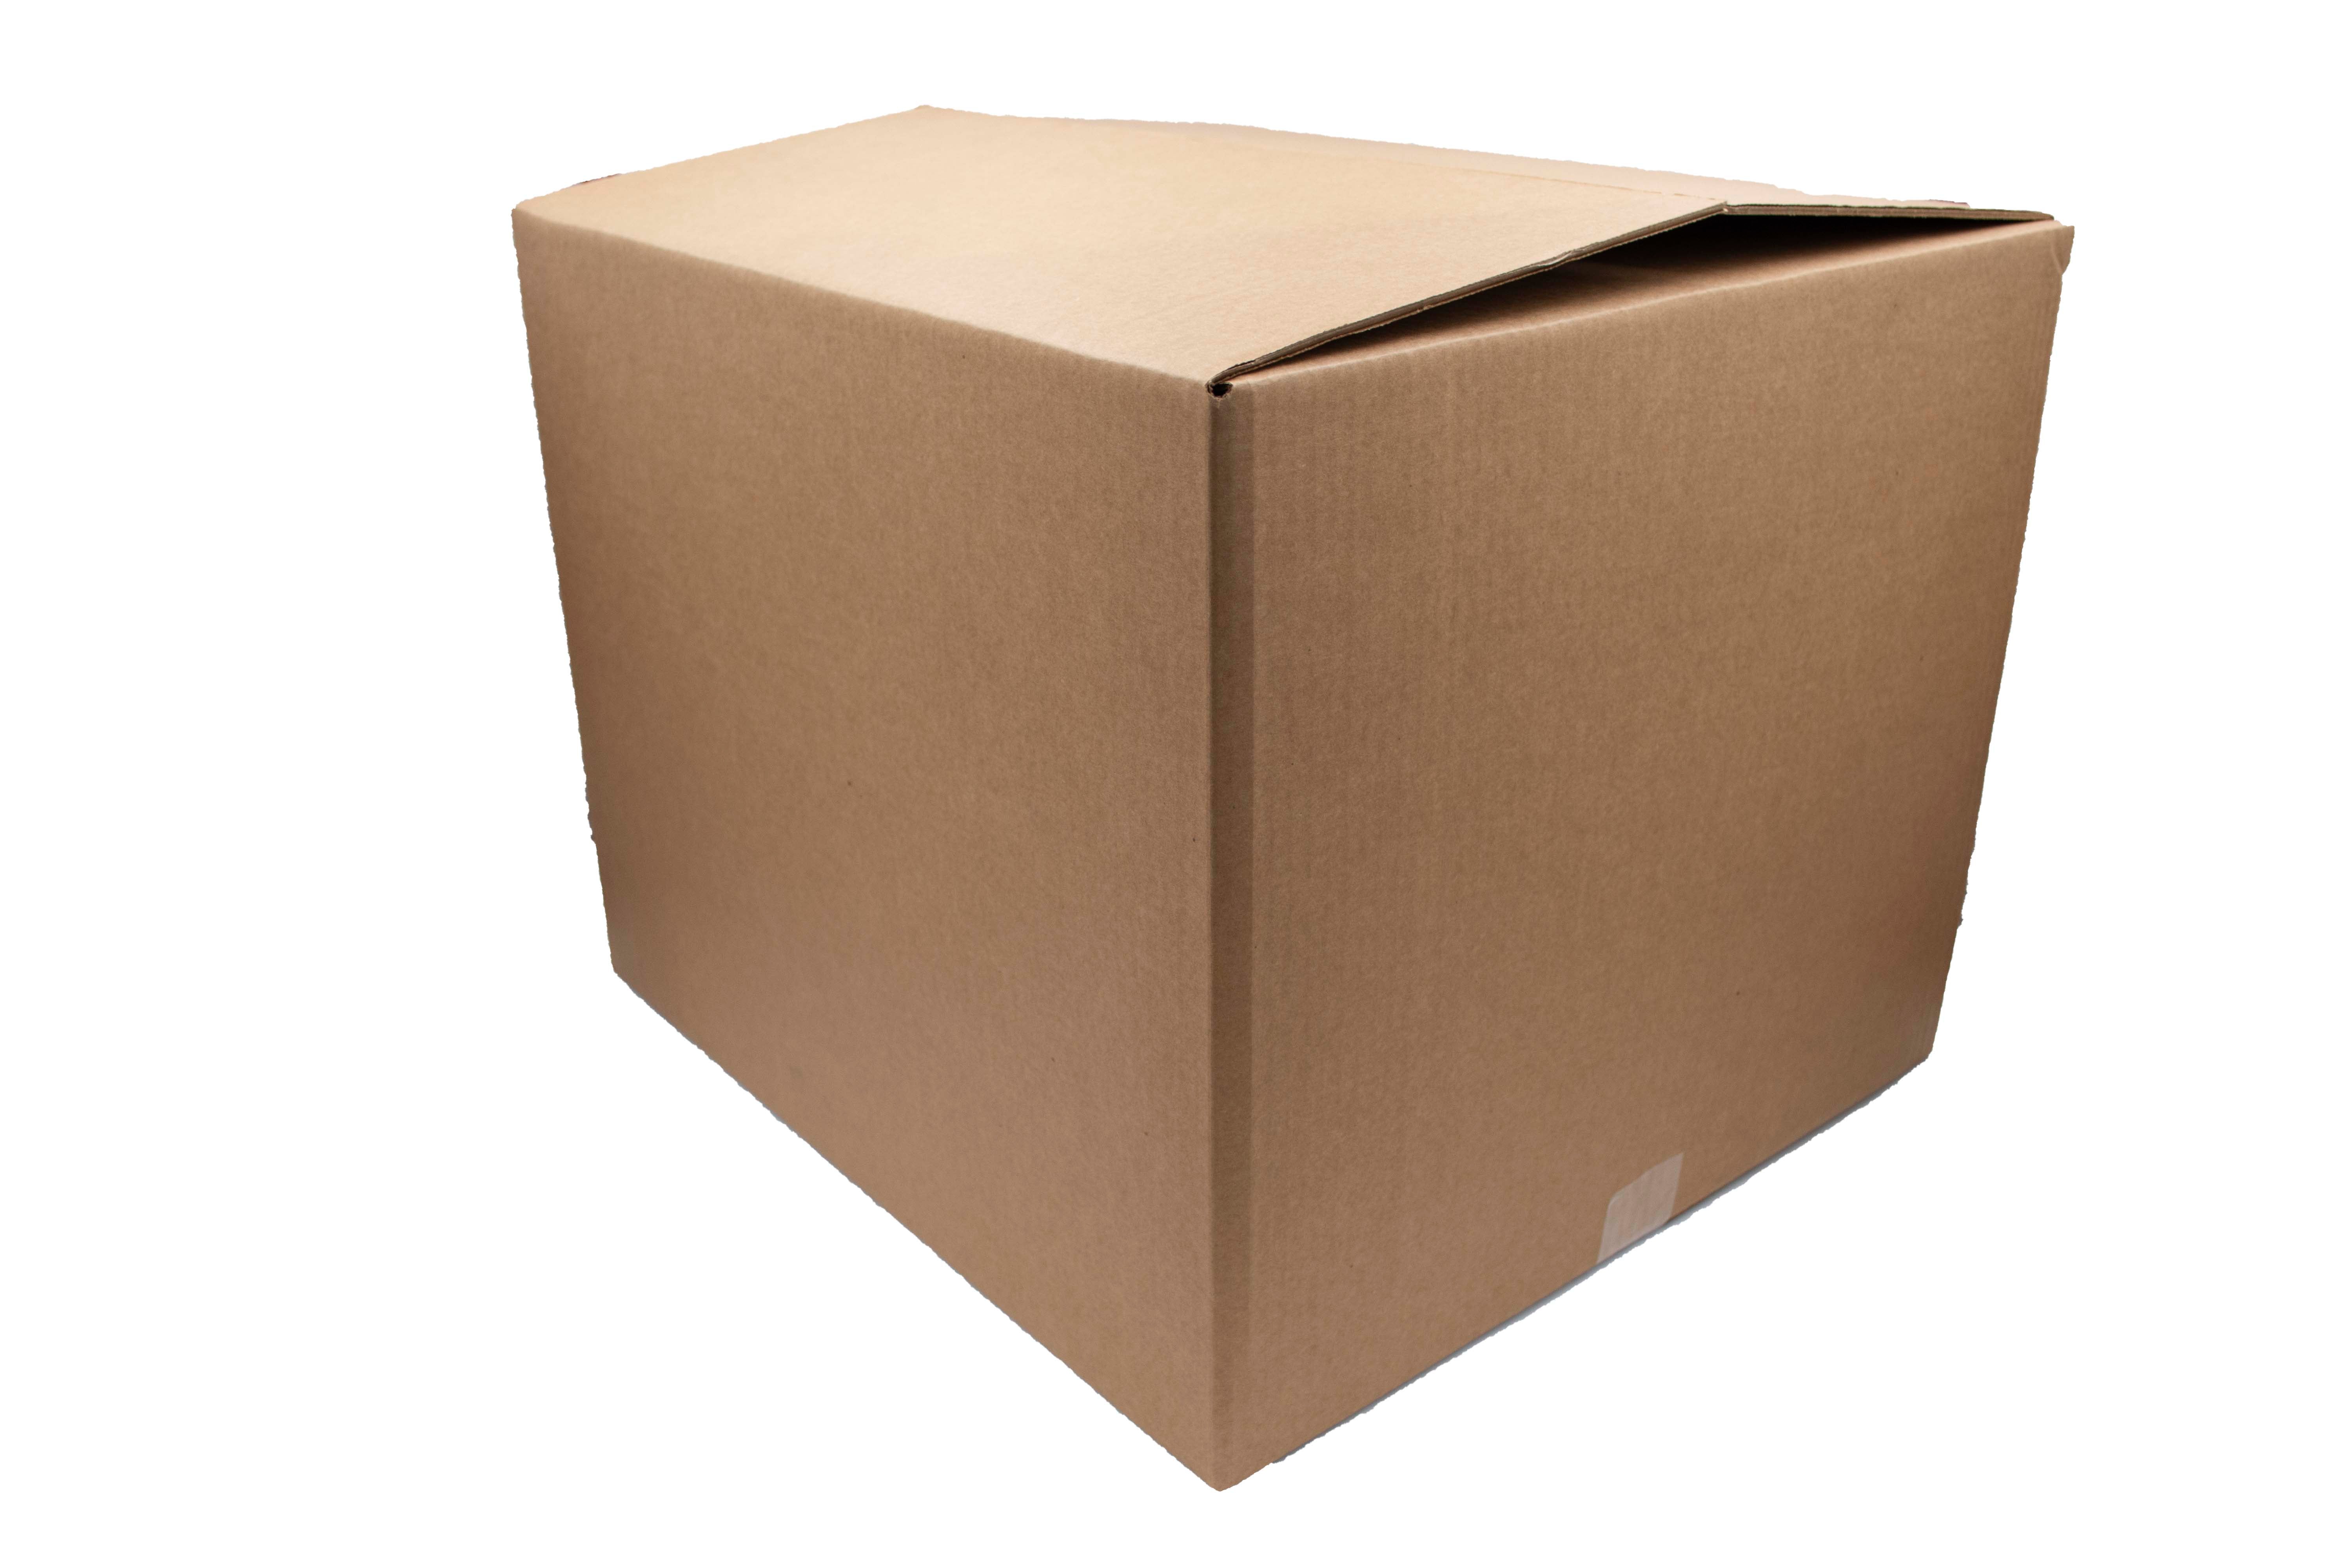 caja, caja de carton,caja para empaque, caja para envio, caja para envolver, caja grande, caja de carton cafe, caja ecologica, caja biodegradable, caja facil de armar